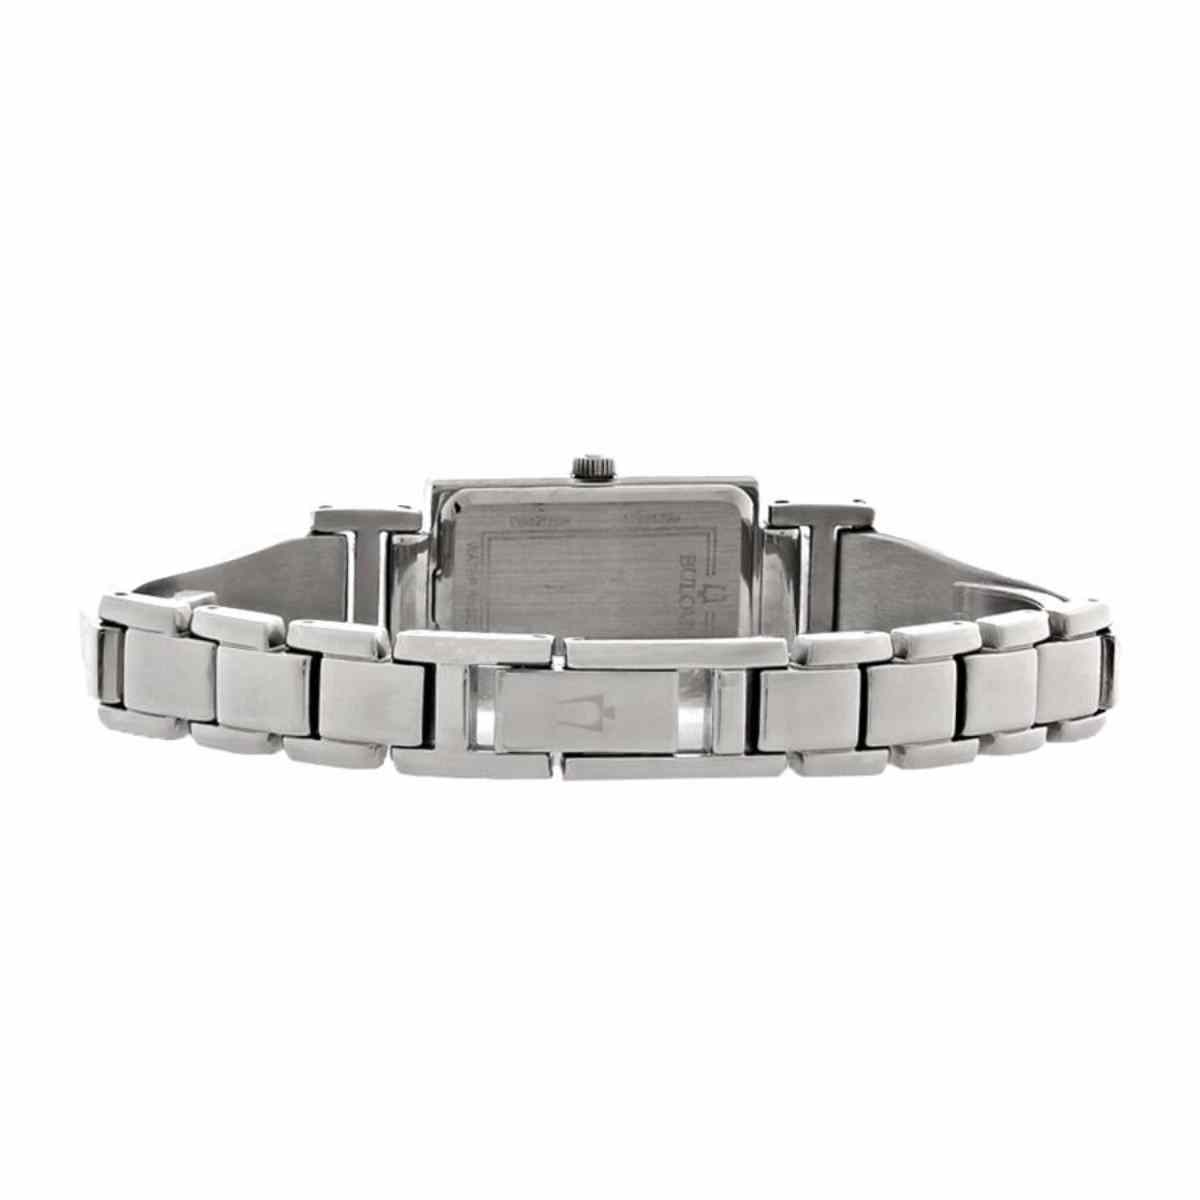 Womens Bulova Stainless Steel Bangle Bracelet Watch - 96L138